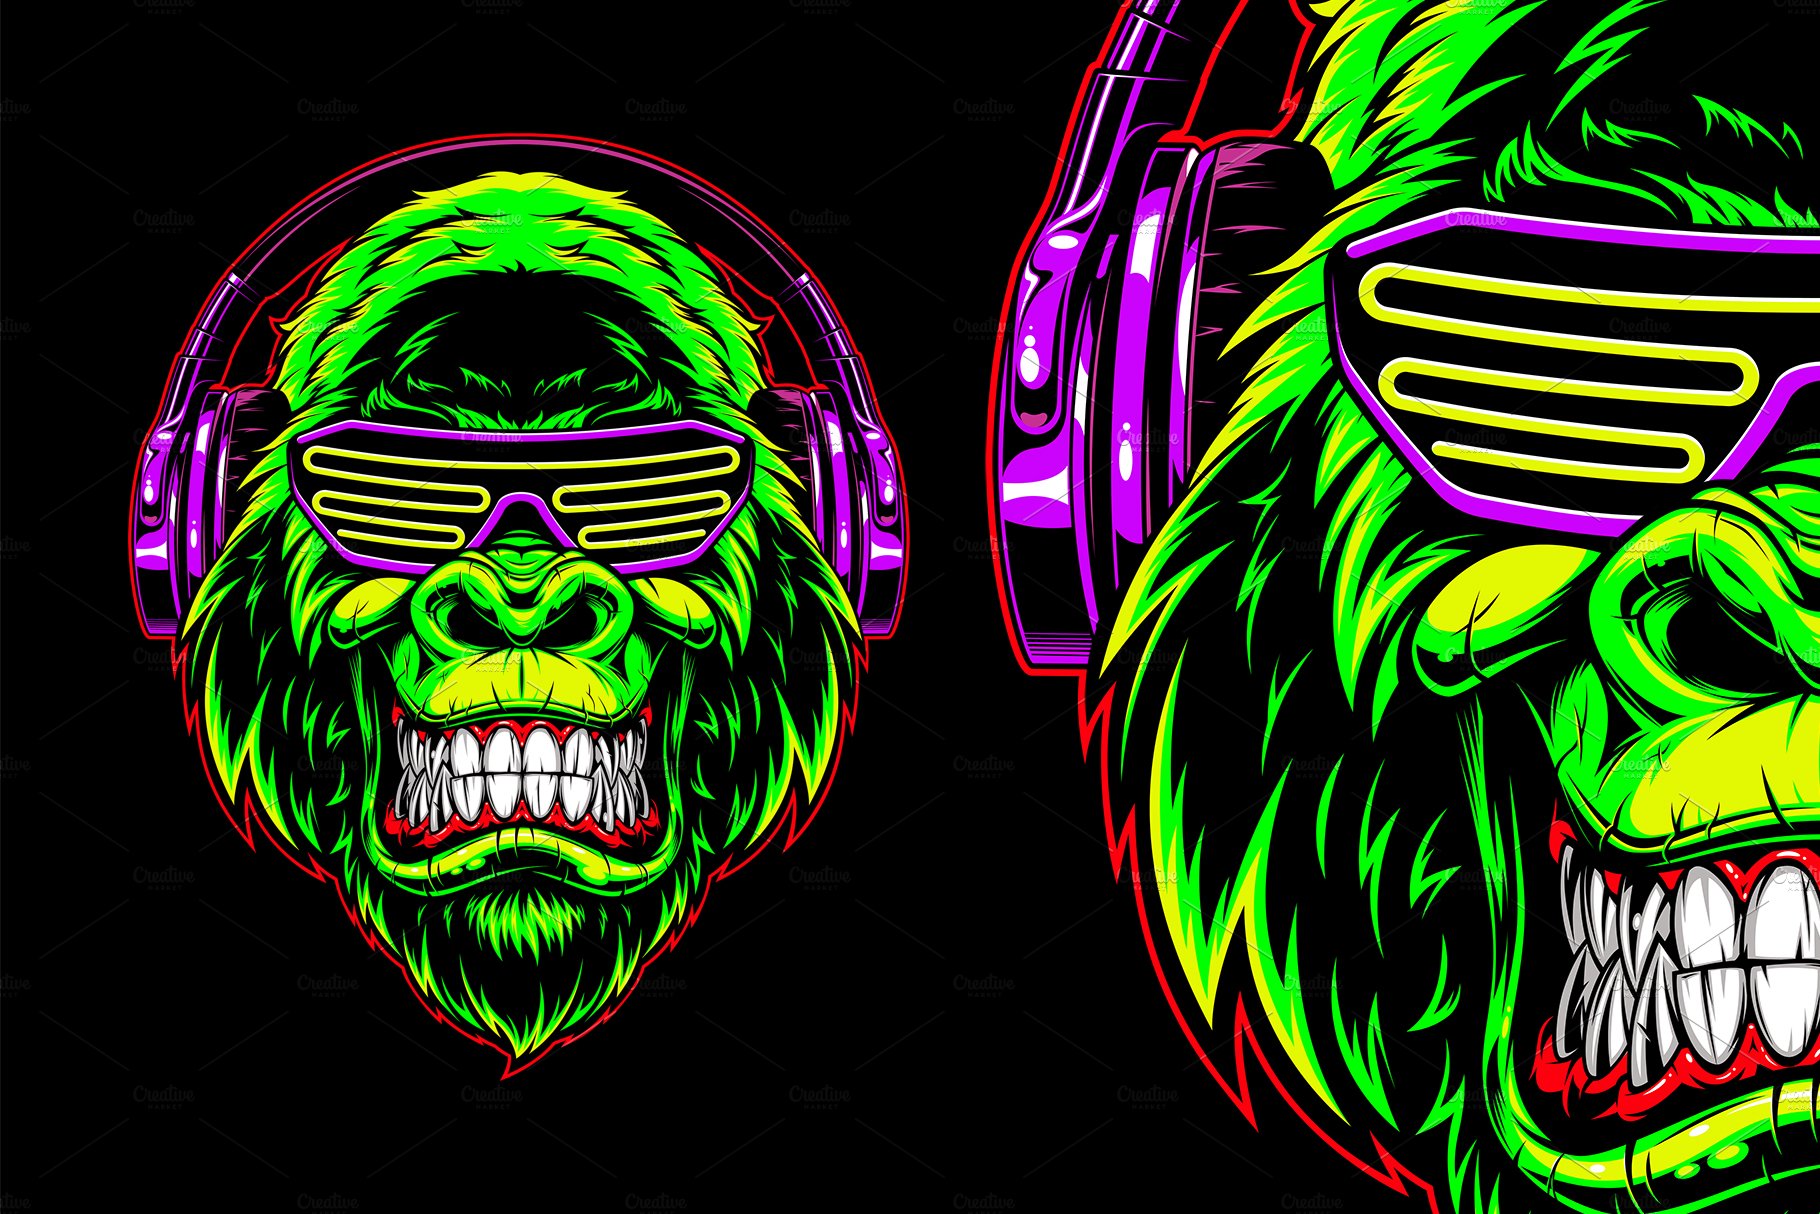 Gorilla with headphones cover image.